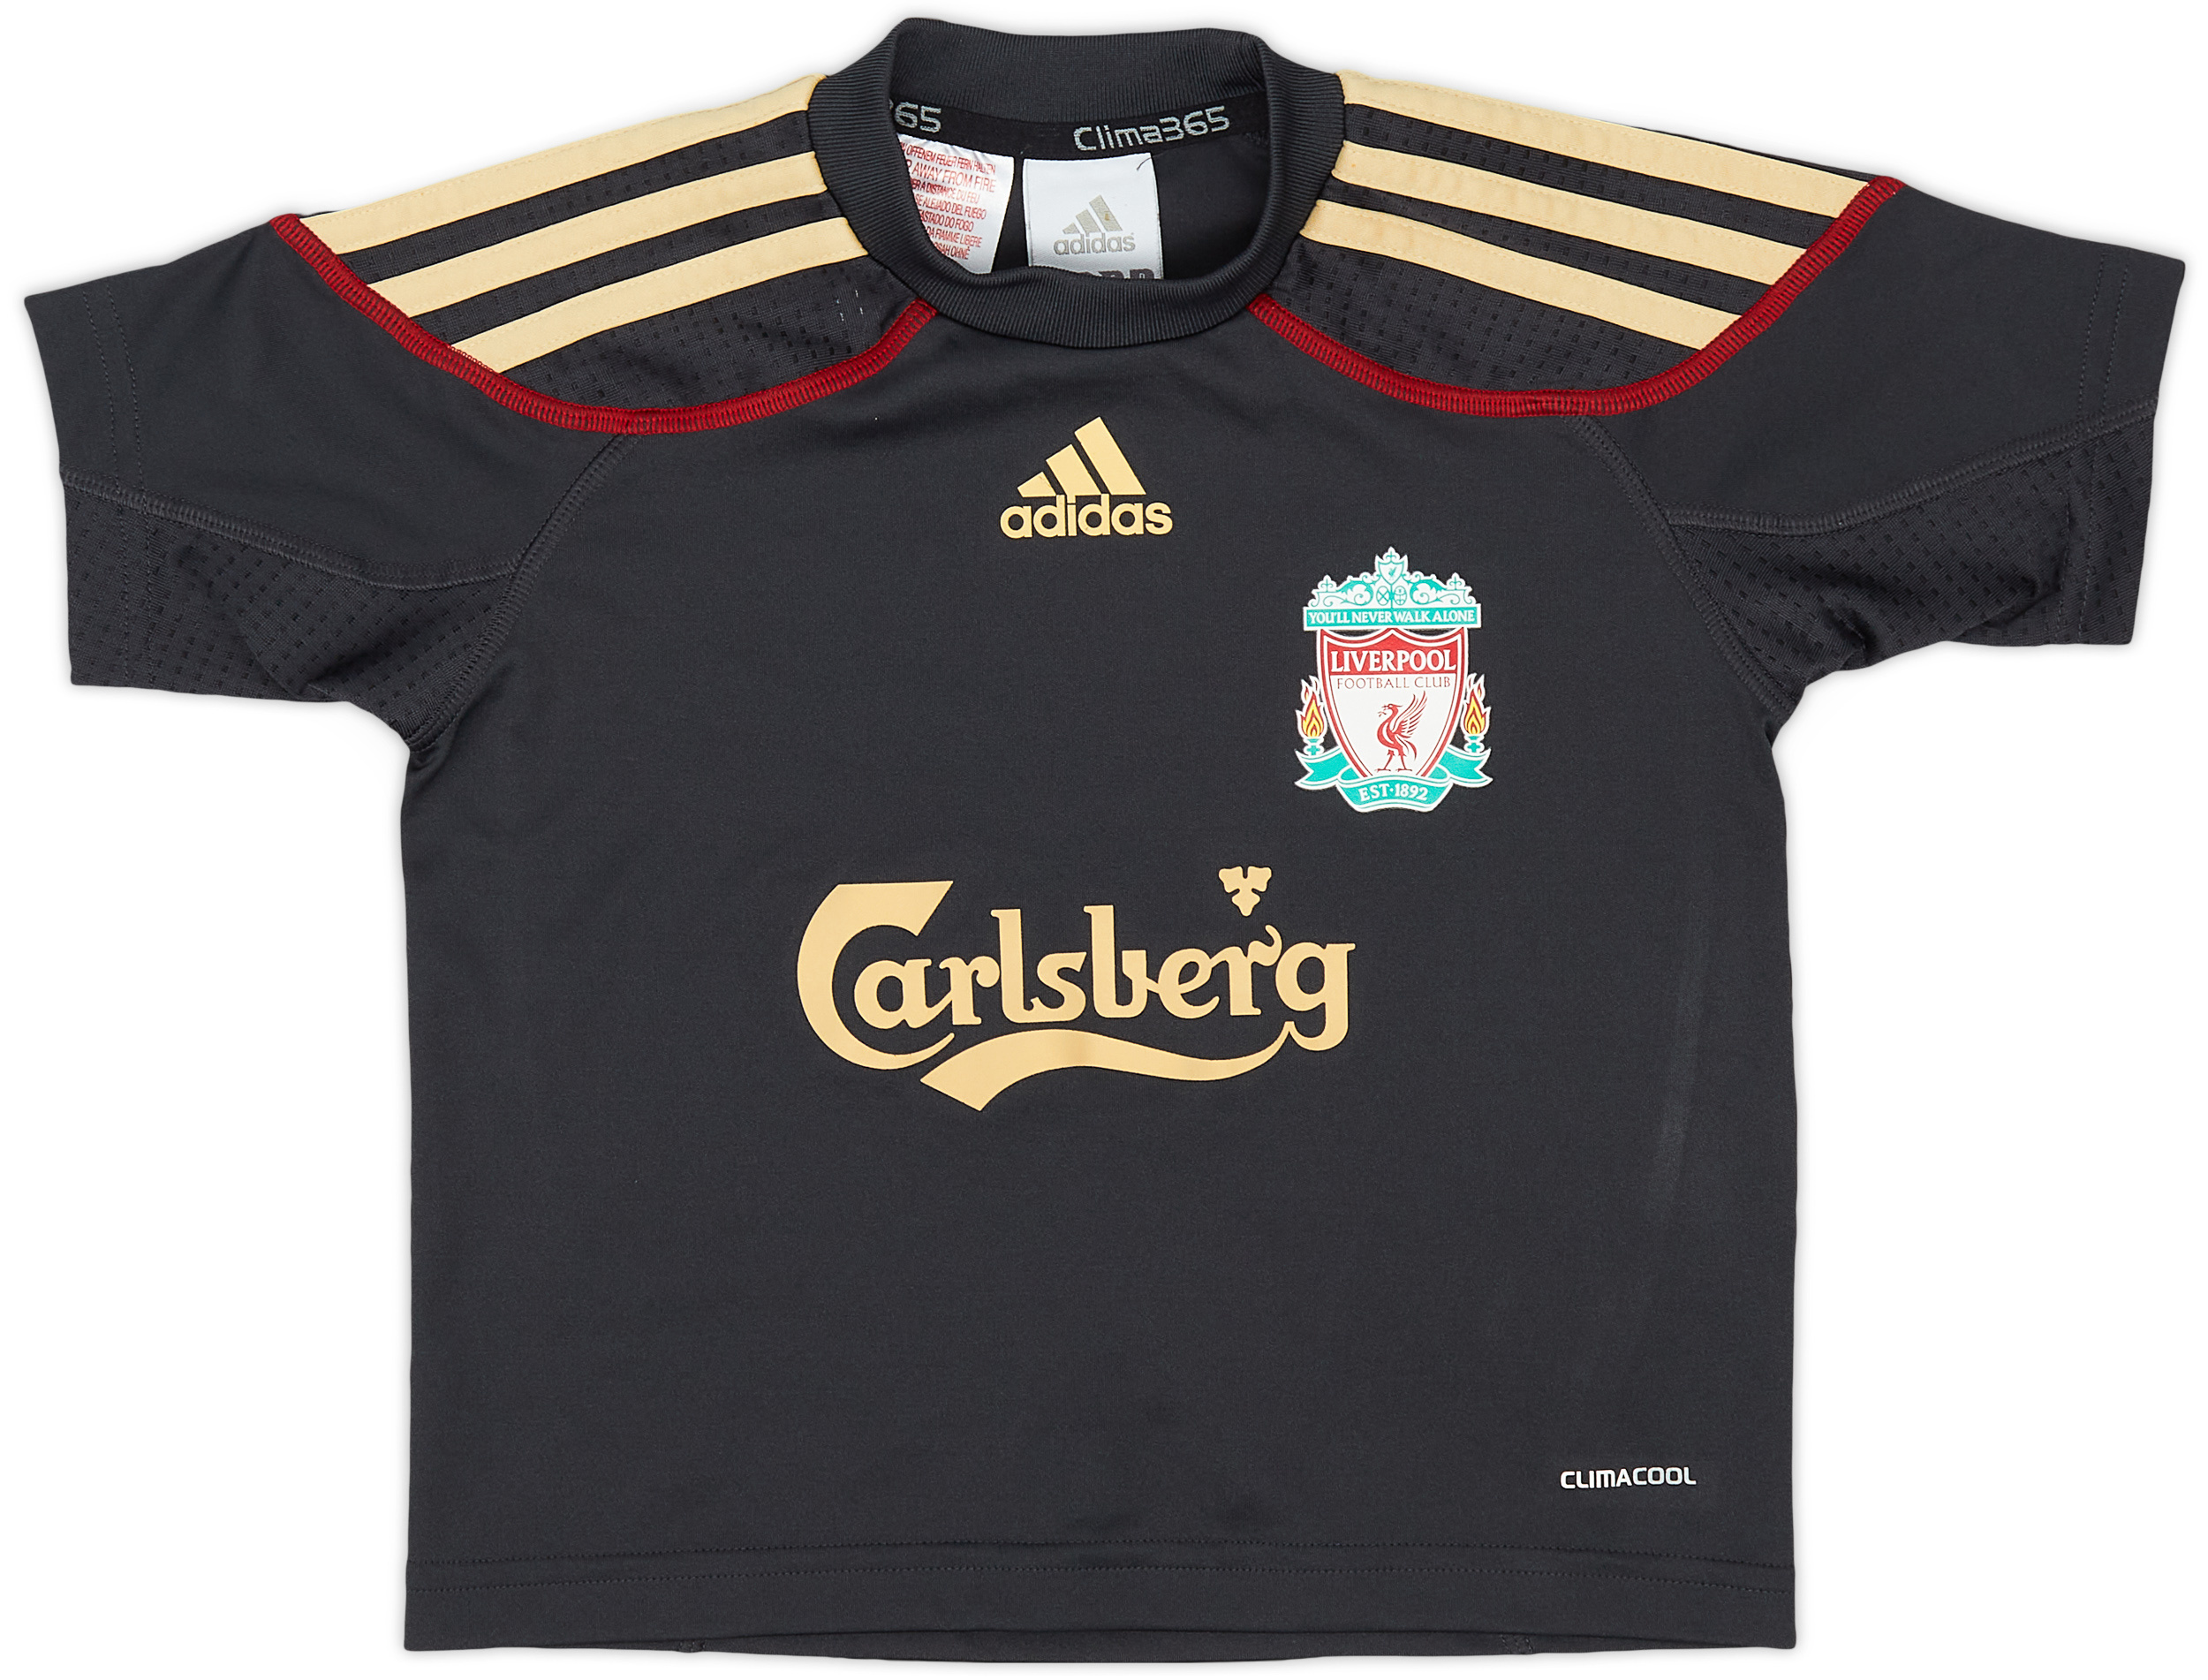 2009-10 Liverpool Away Shirt - 9/10 - (1-2 Years)